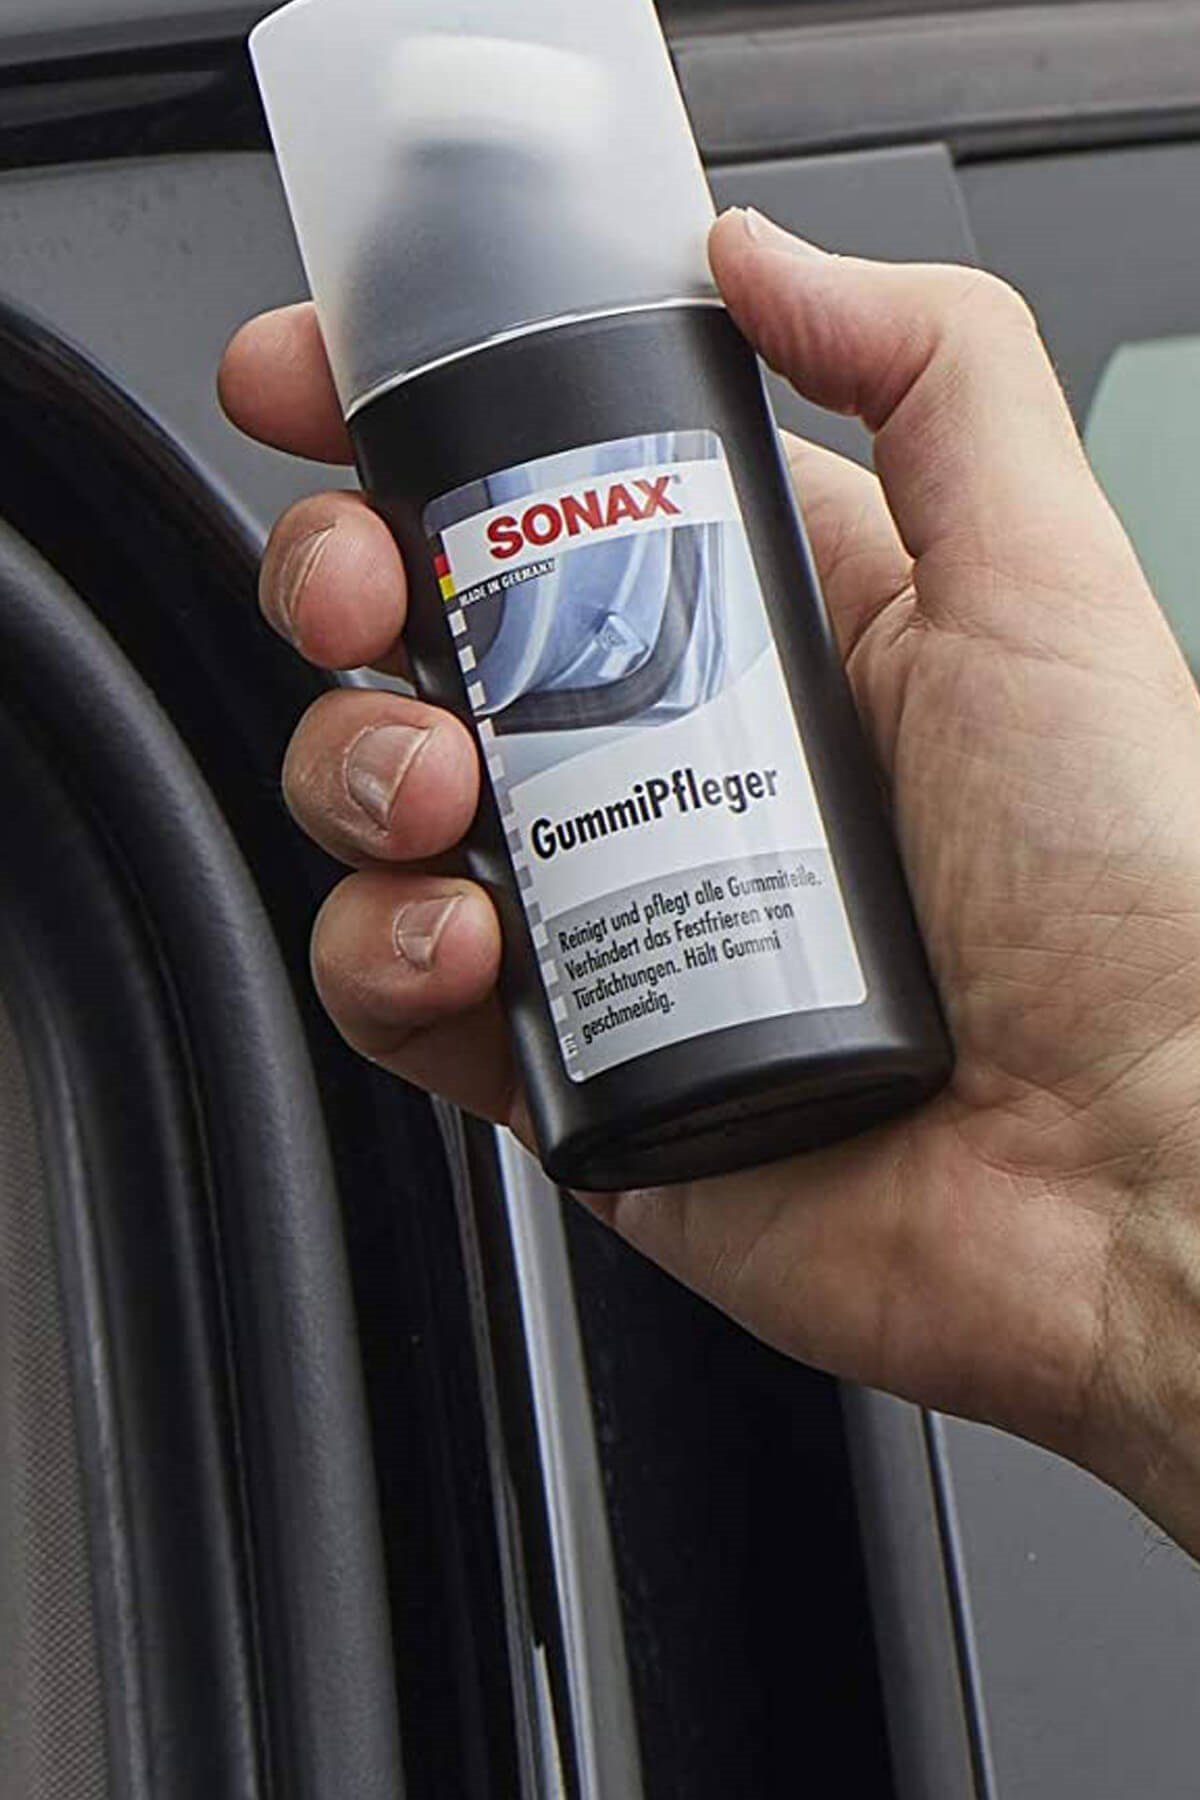 SONAX Rubber Protectant (GummiPfleger) - 100ml